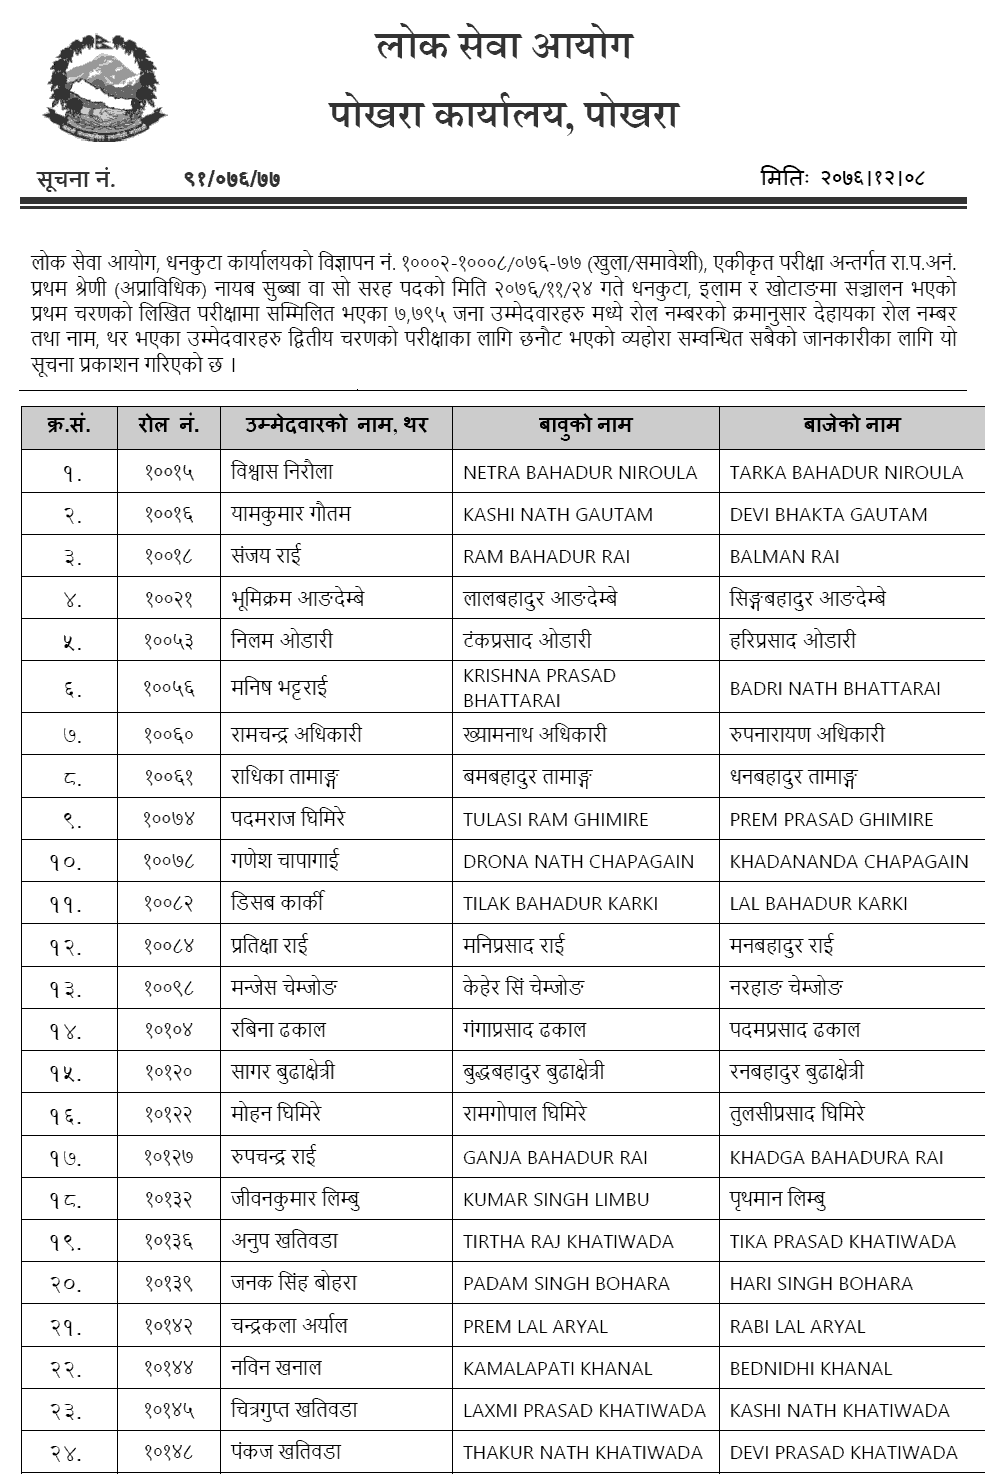 Nayab Subba Written Exam Result of First Phase - Lok Sewa Aayog Dhankuta